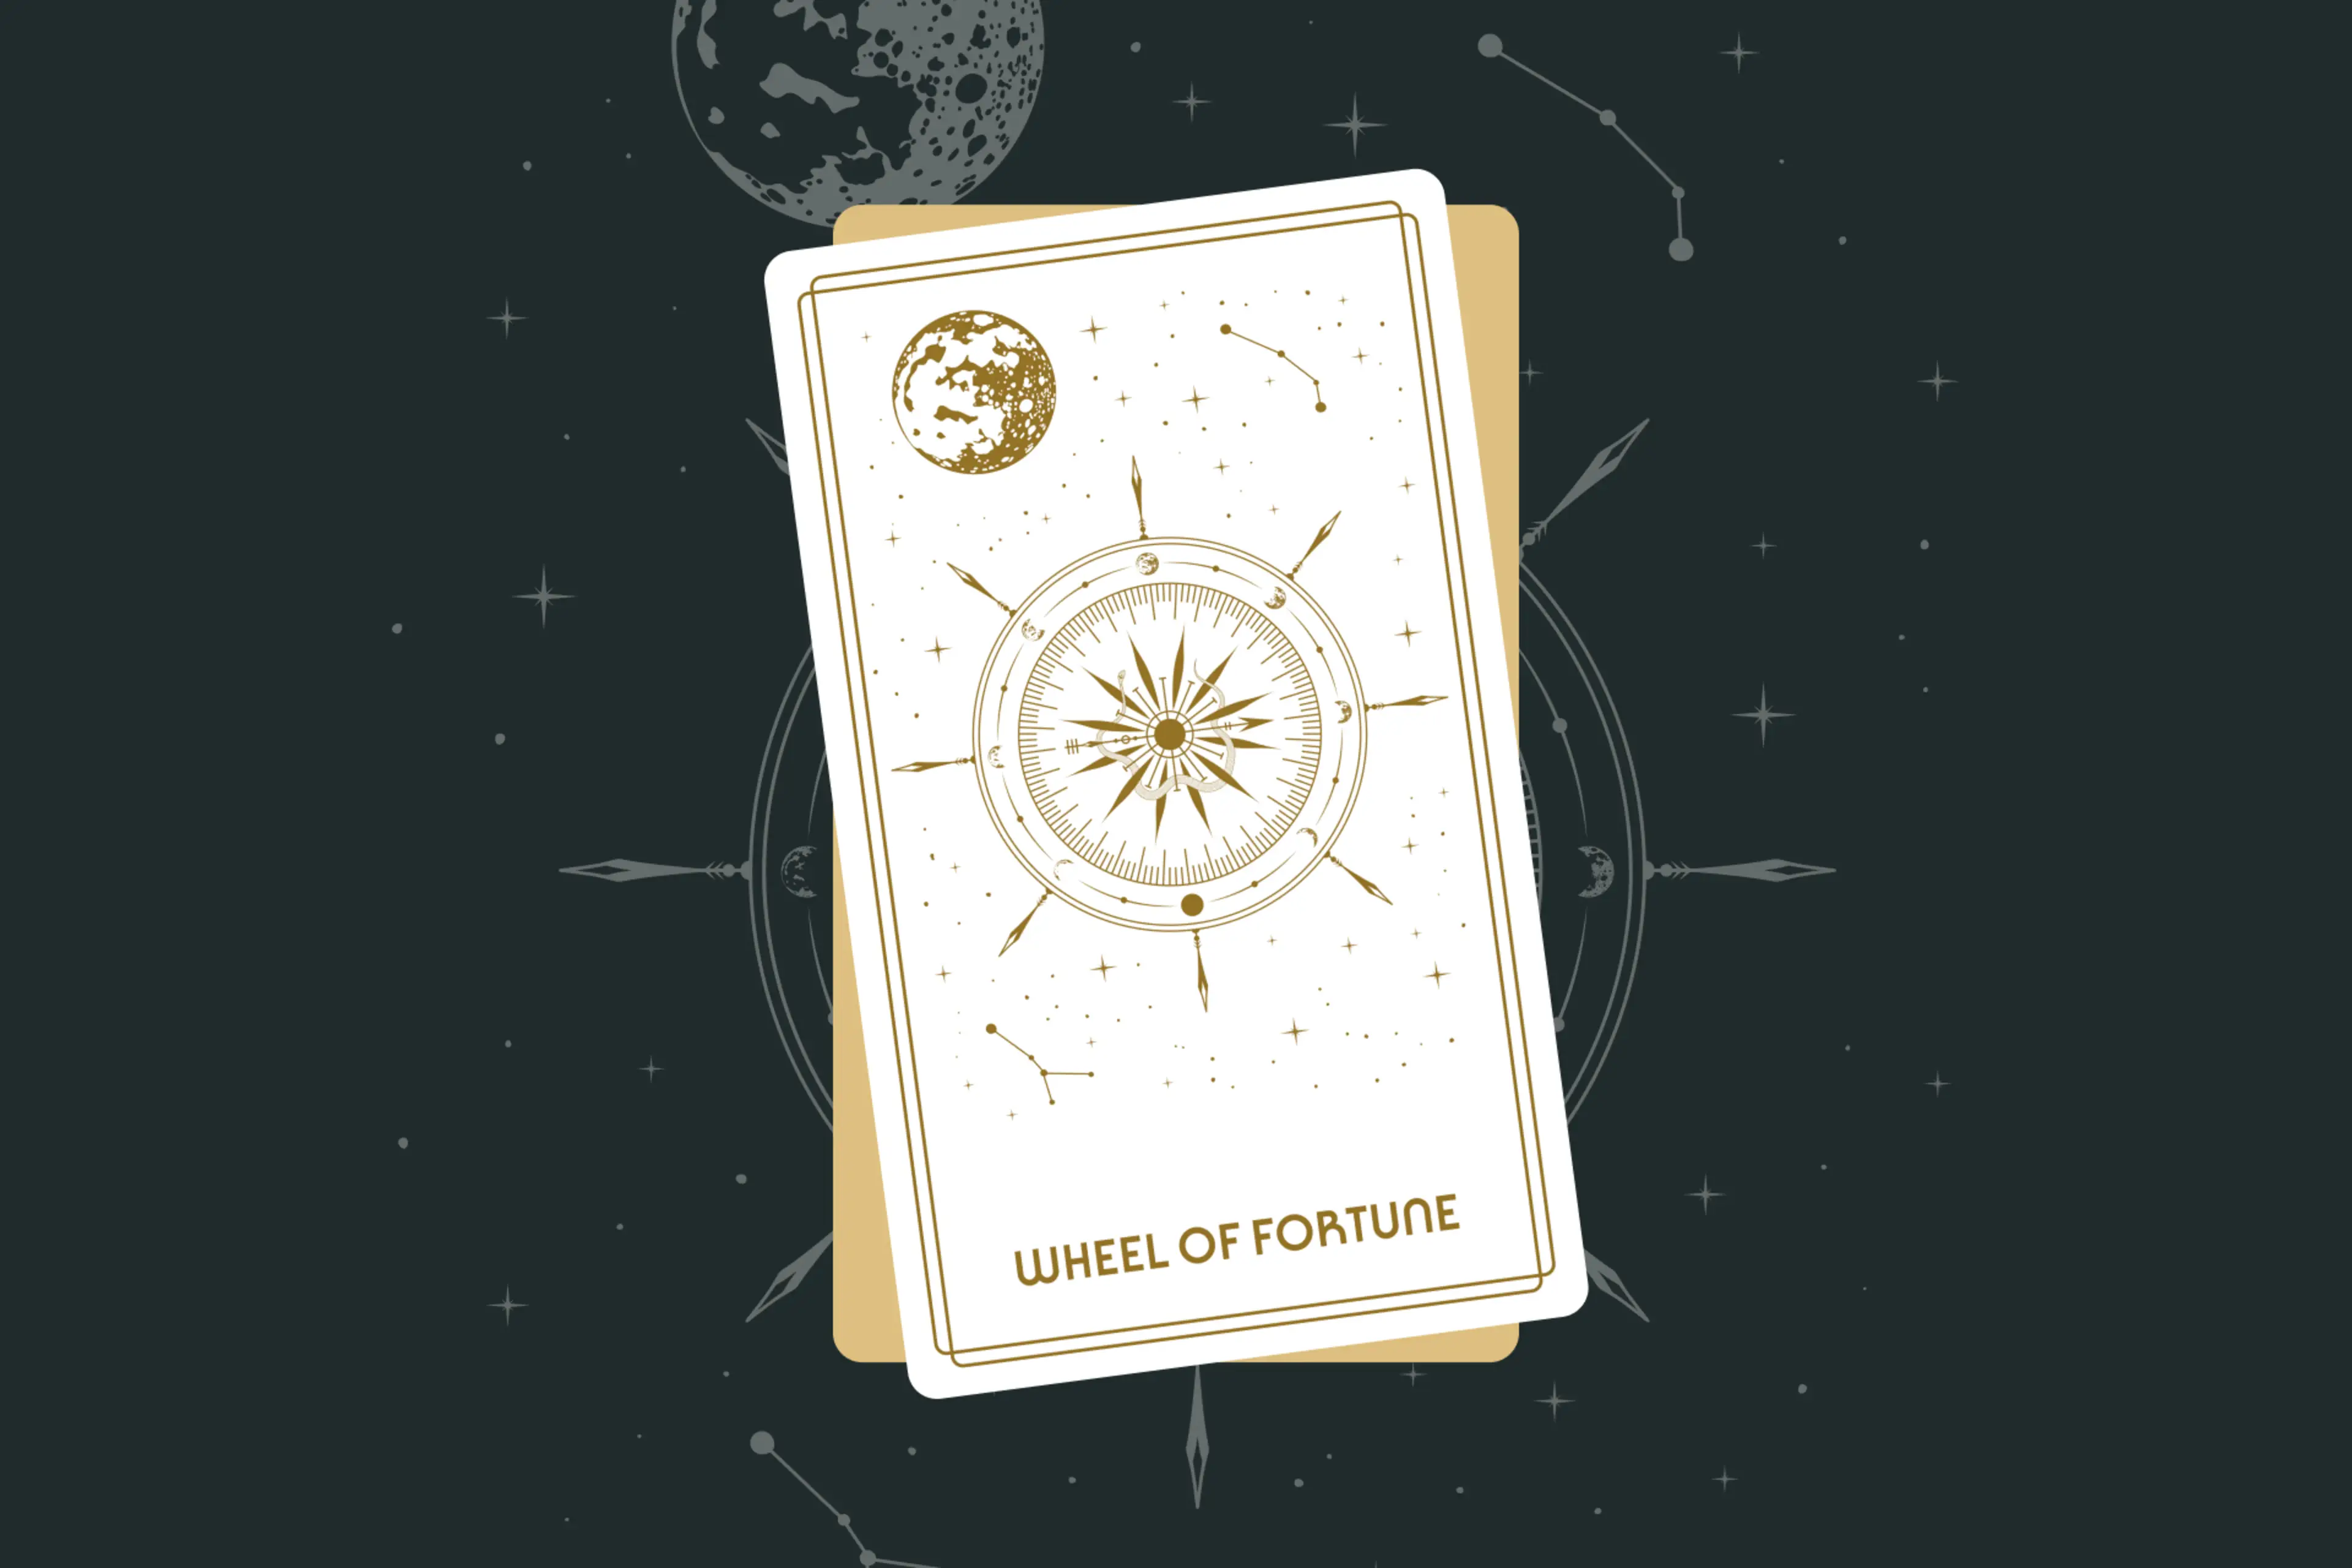 Wheel of Fortune Tarot Card (Major Arcana #10)